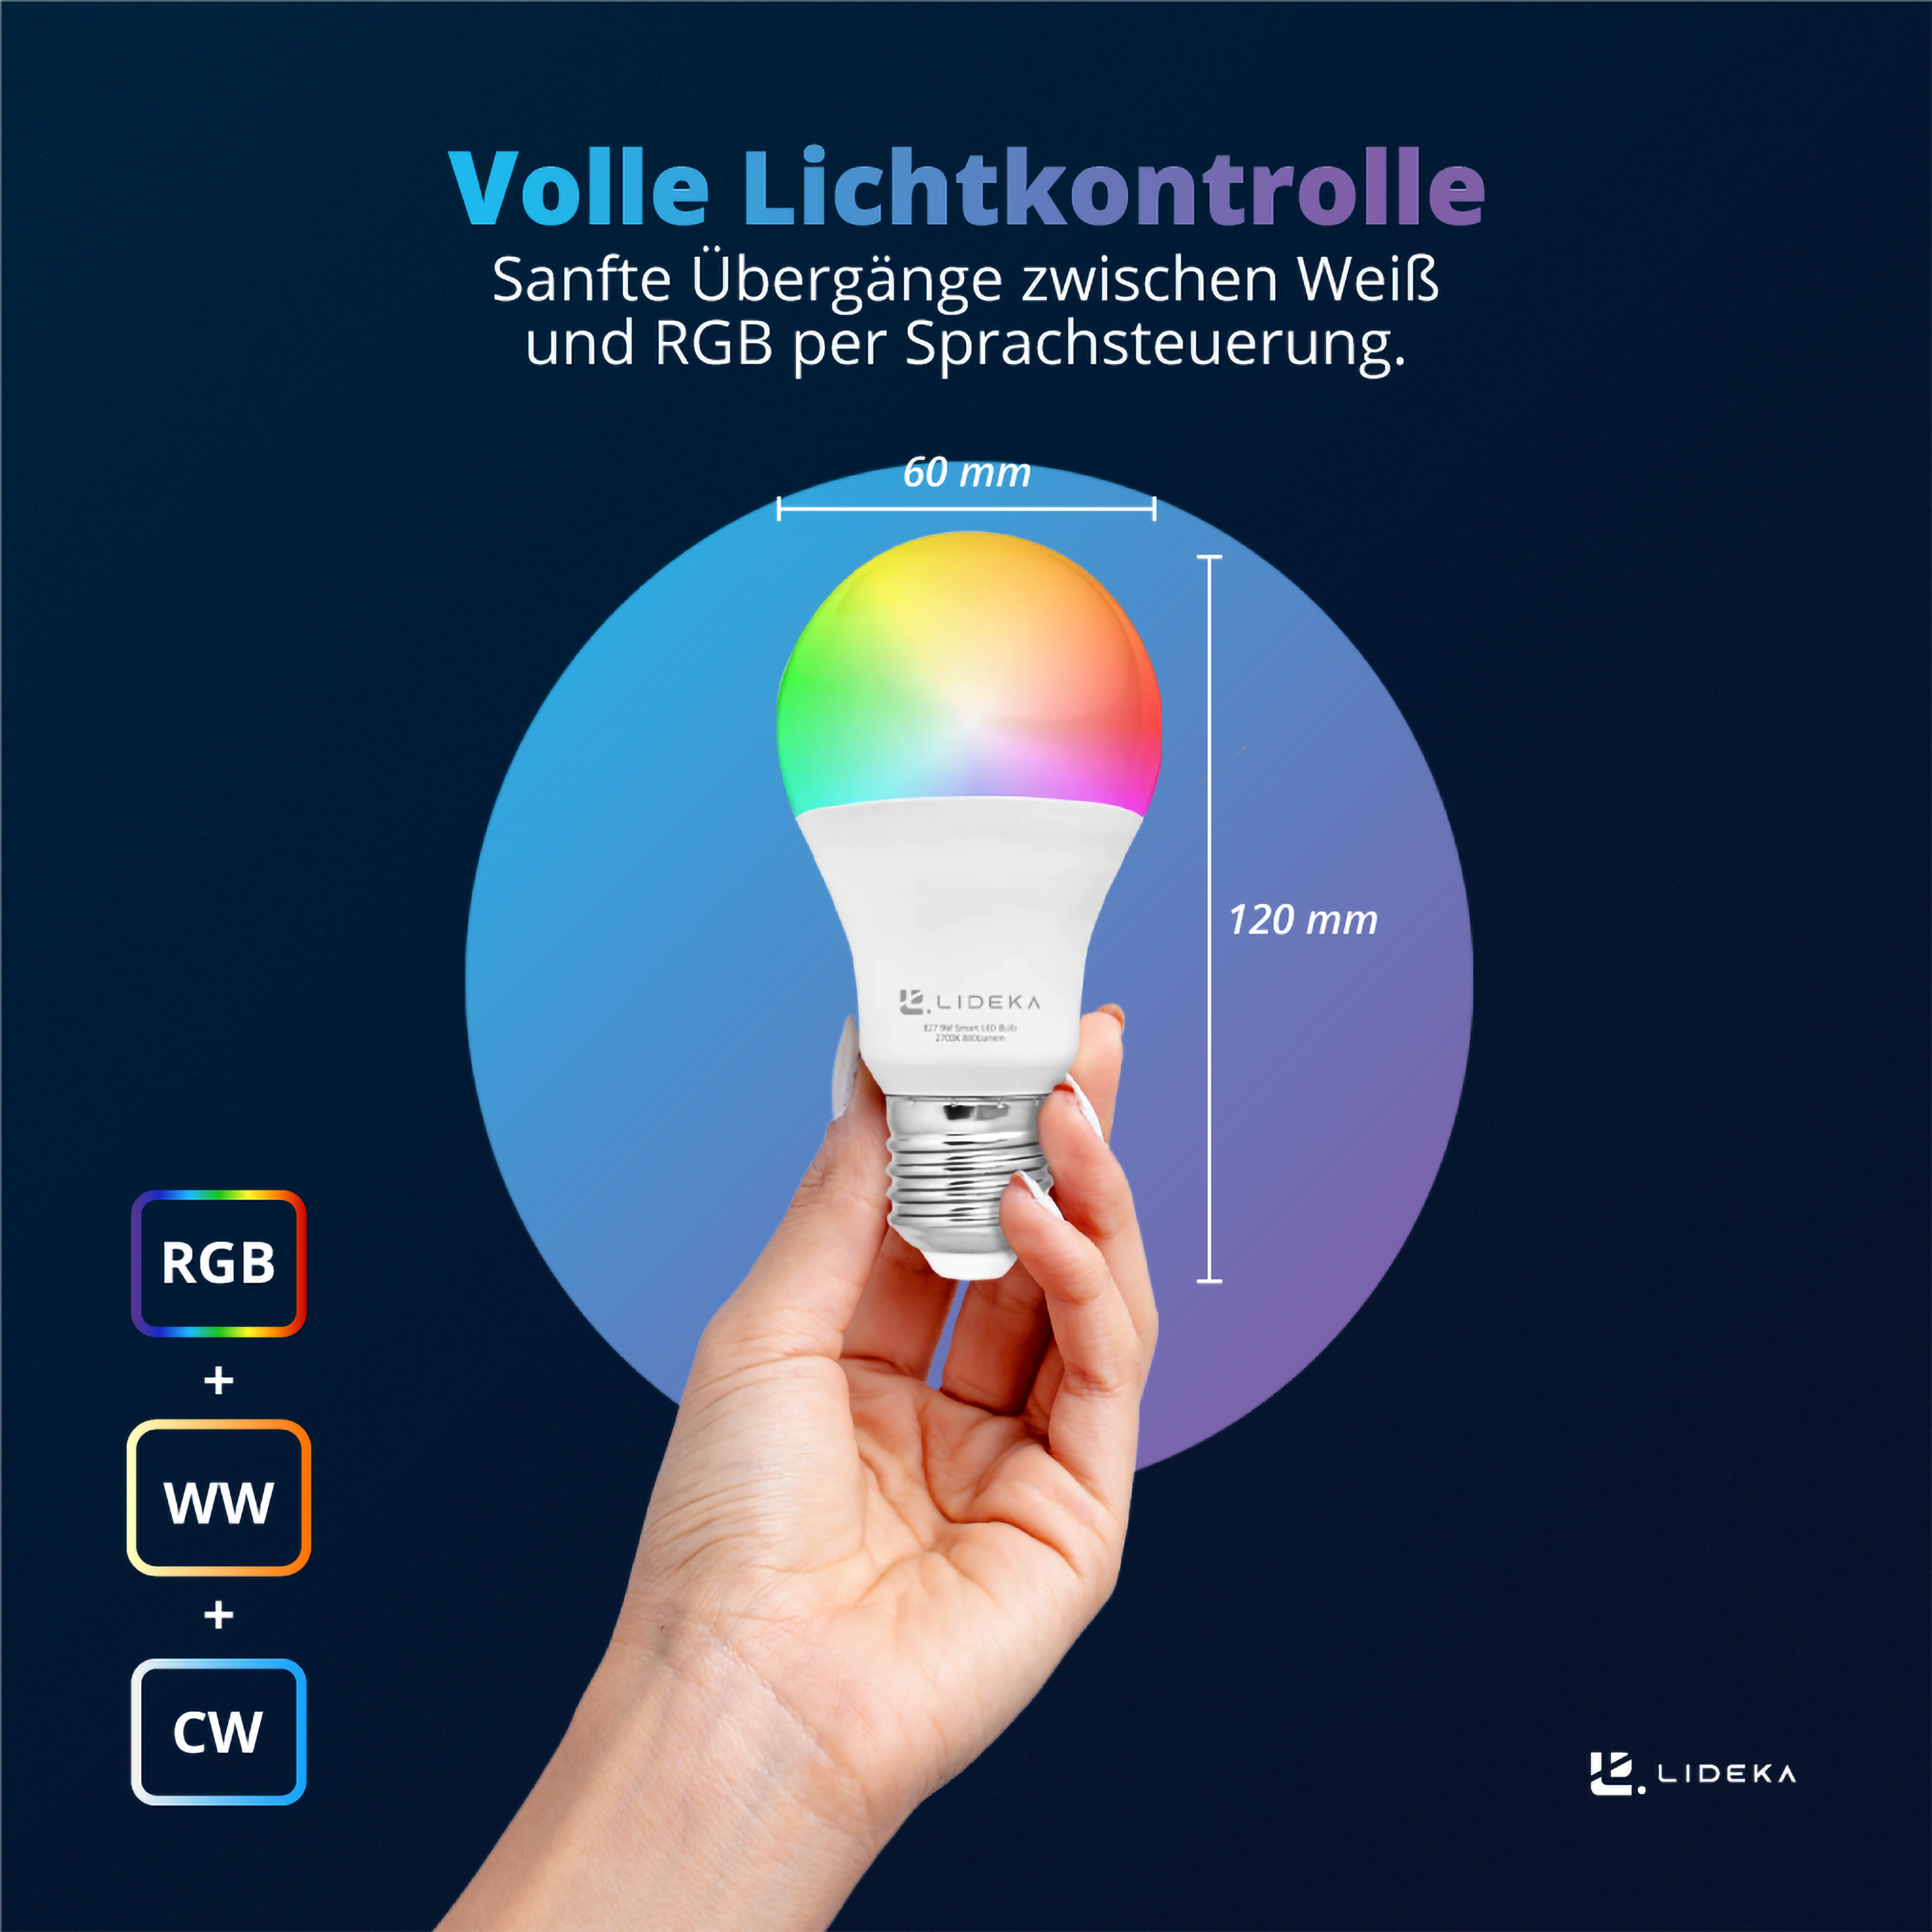 E27 LED-Leuchtmittel 9W Smart Watt LED E27 5 Lampe WiFi Dimmbare 4er-pack Multicolors LIDEKA